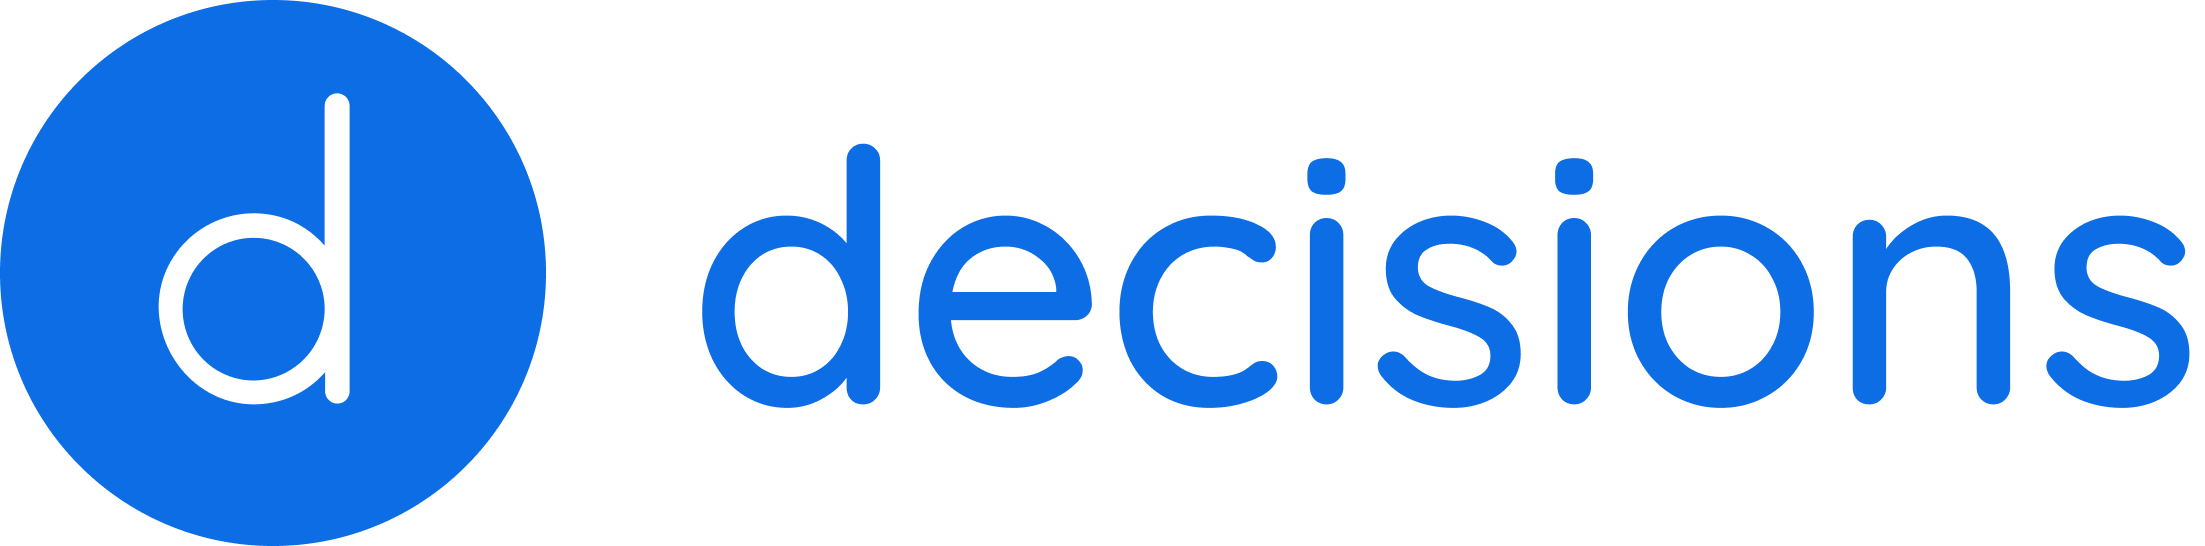 decisions-logo-new